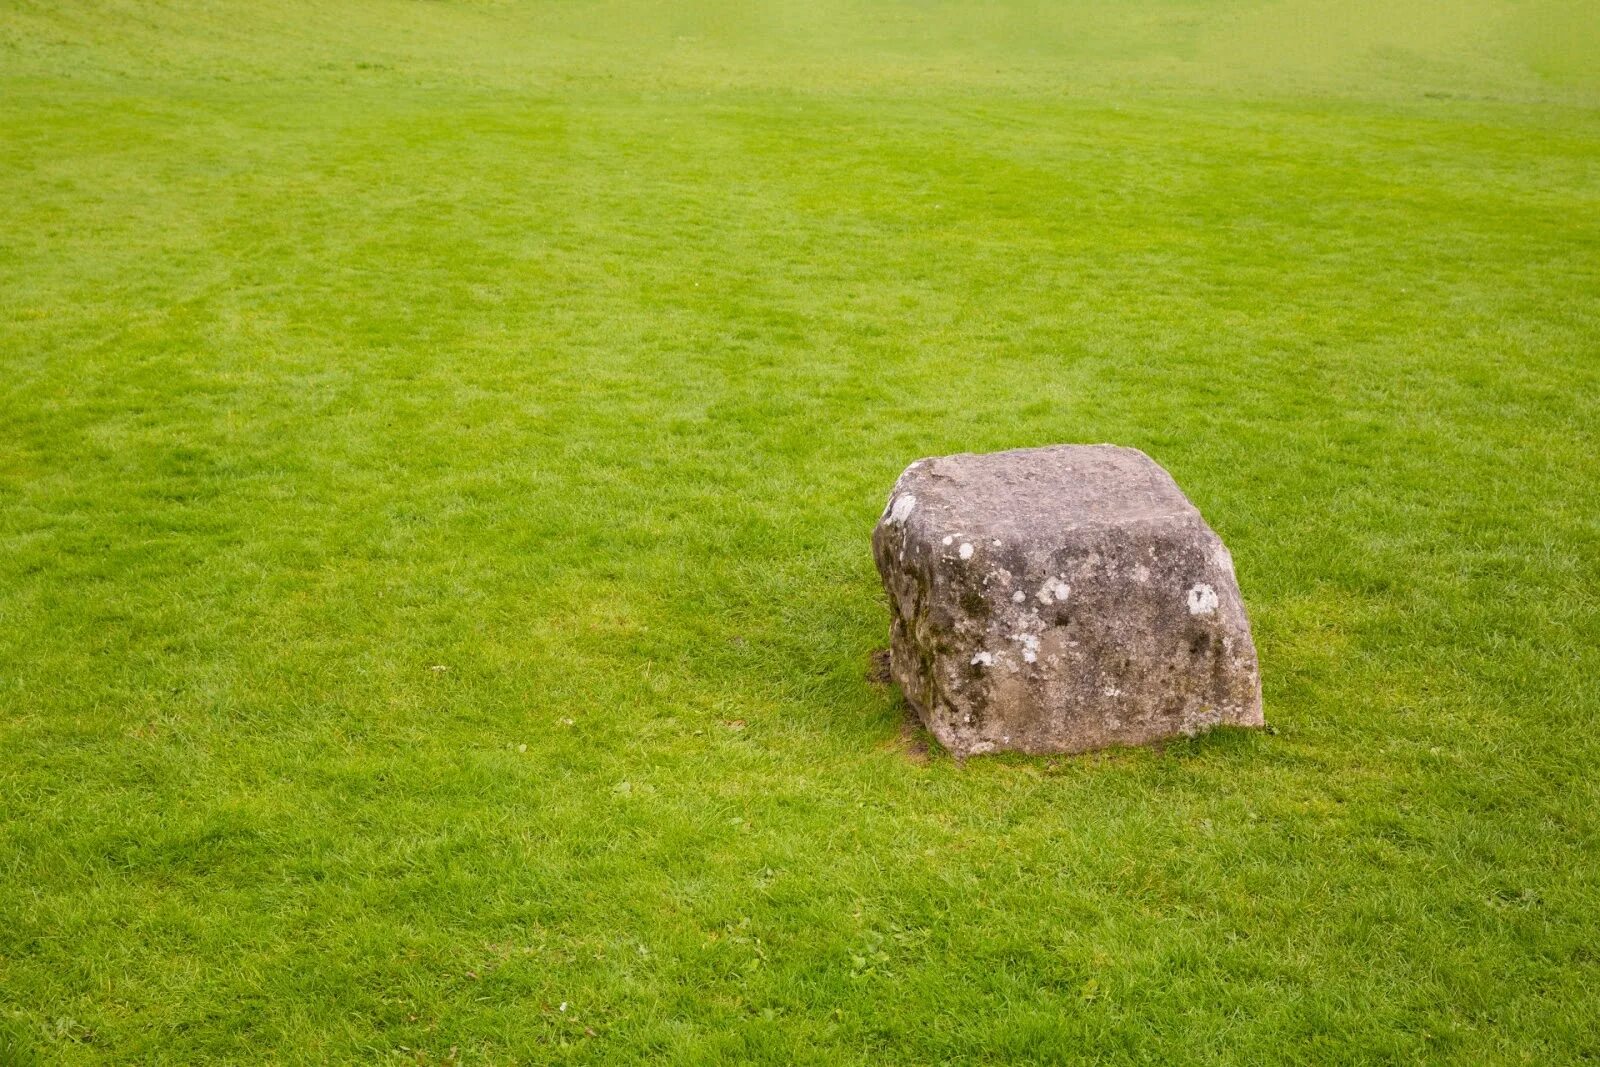 Камни на газоне. Камни в траве. Булыжники на газонной траве. Булыжник и газон. Their stones